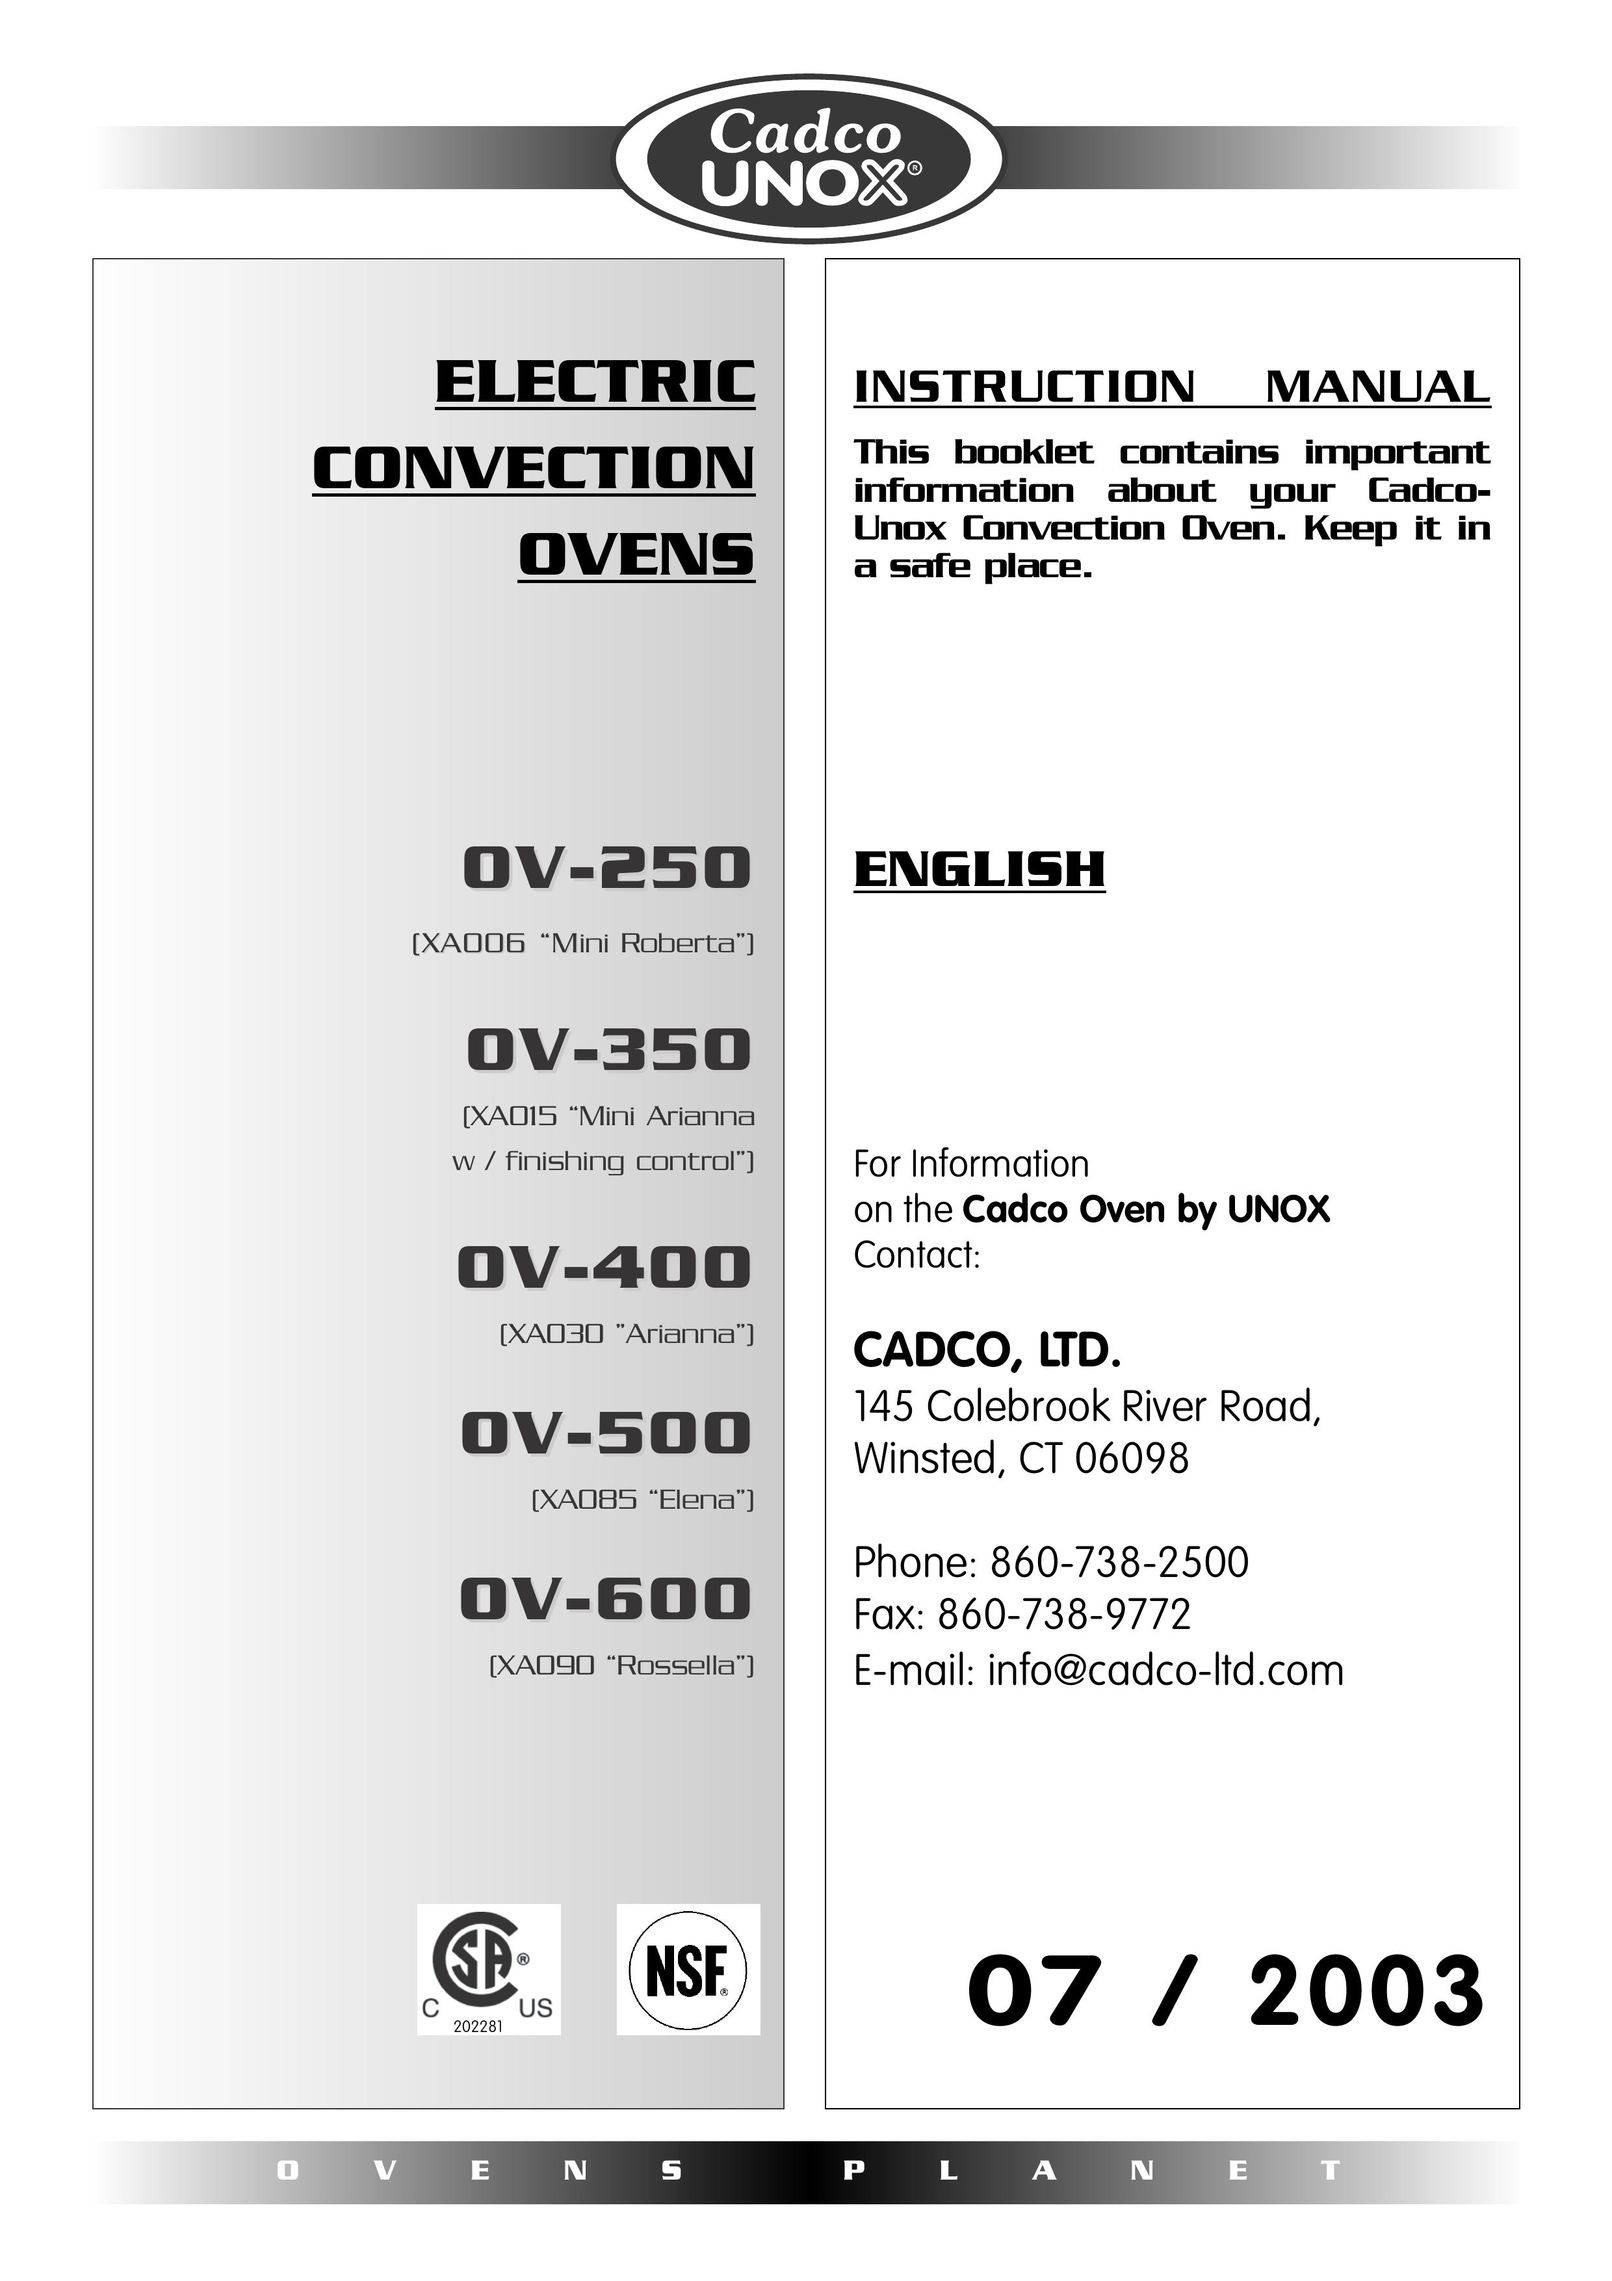 Cadco OV-400 Convection Oven User Manual